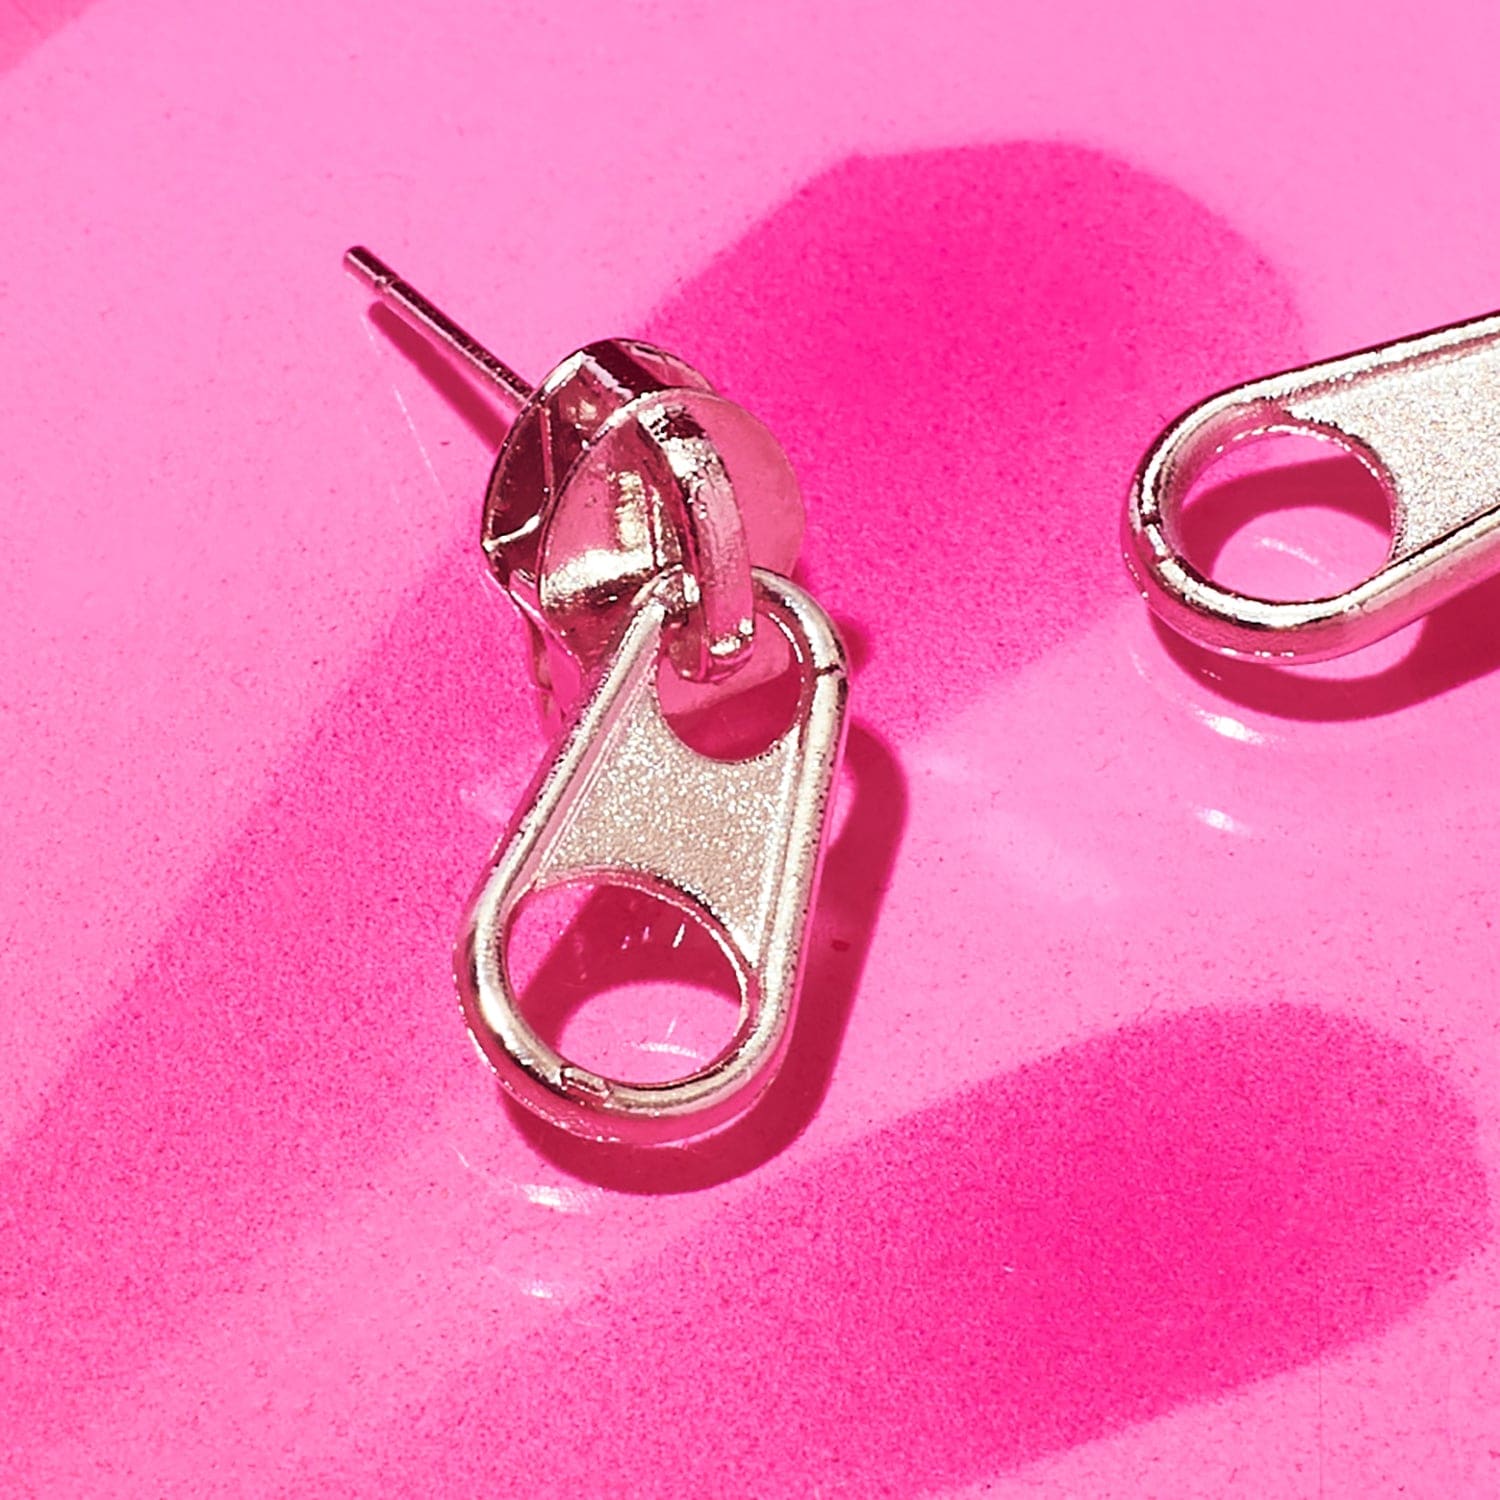 Zipper Pull Earrings Silver E17228-1 Accessories - Cute